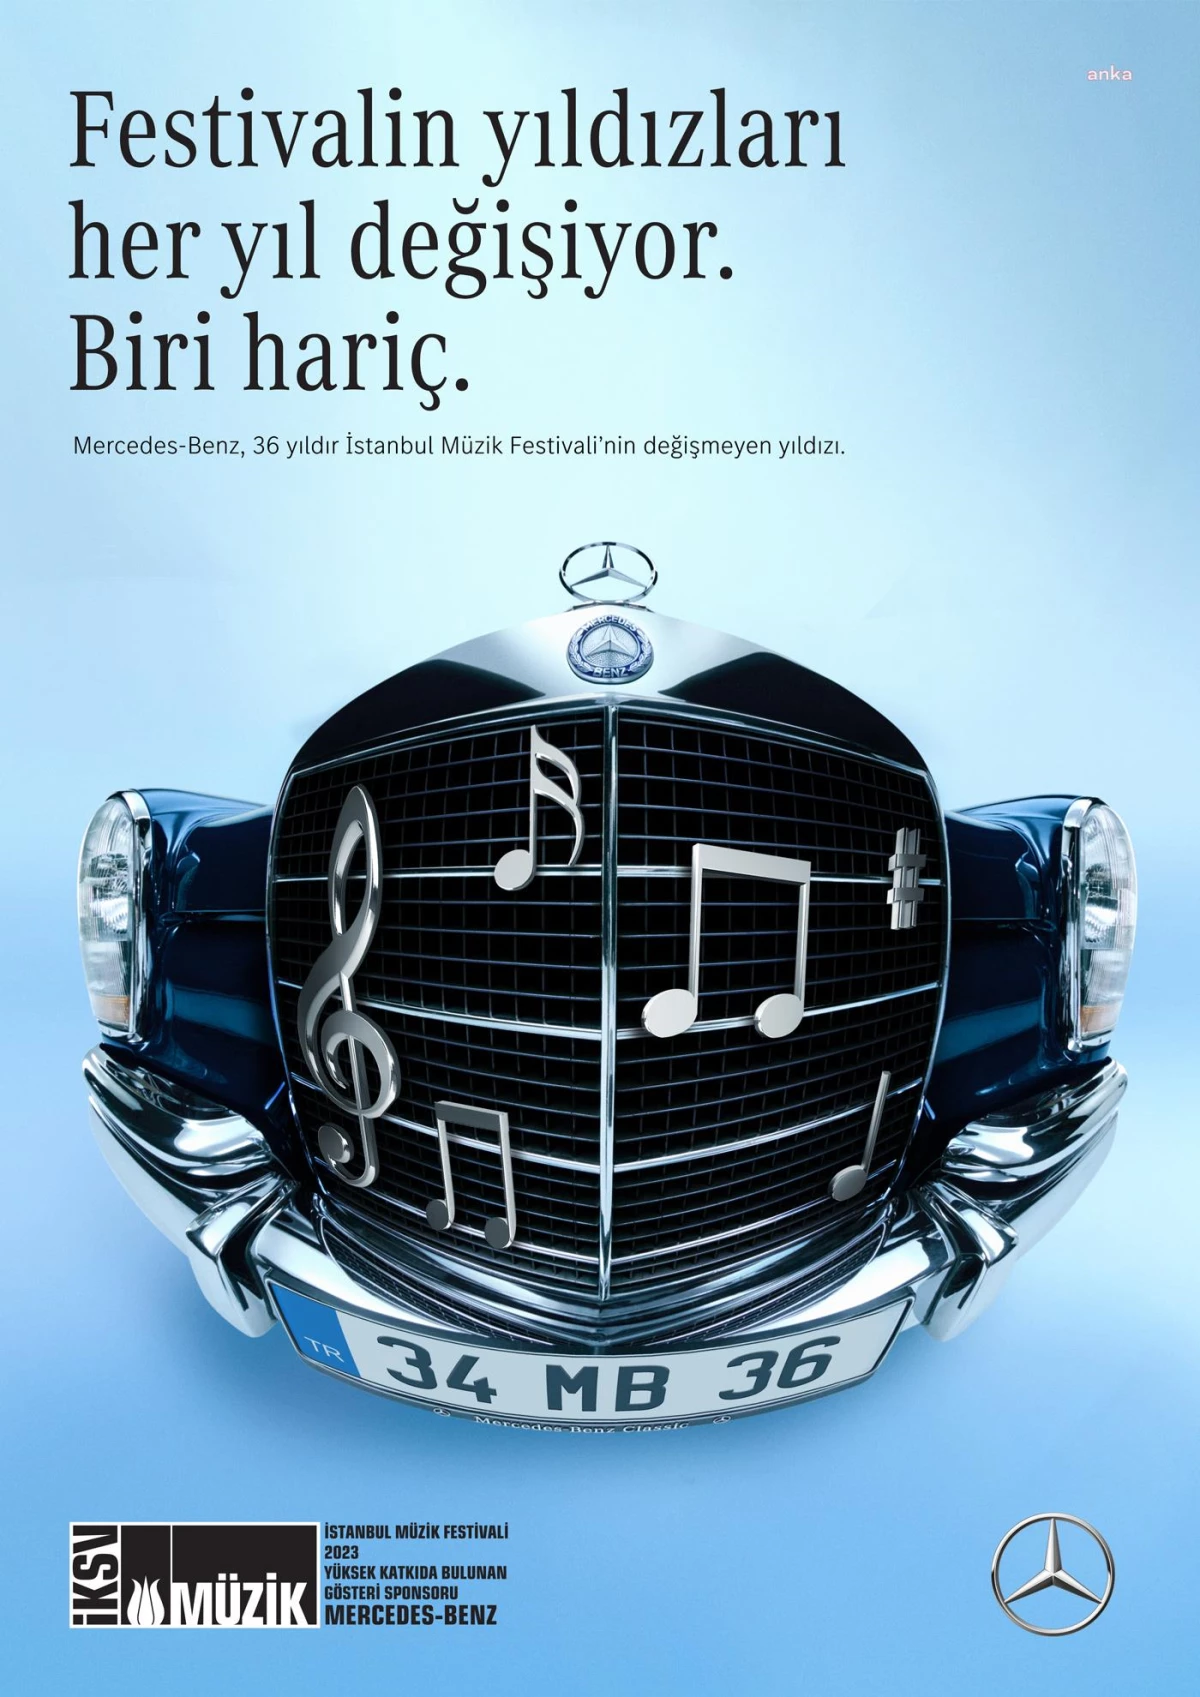 Mercedes-Benz, İstanbul Müzik Festivali\'ne 36. kez sponsor oldu